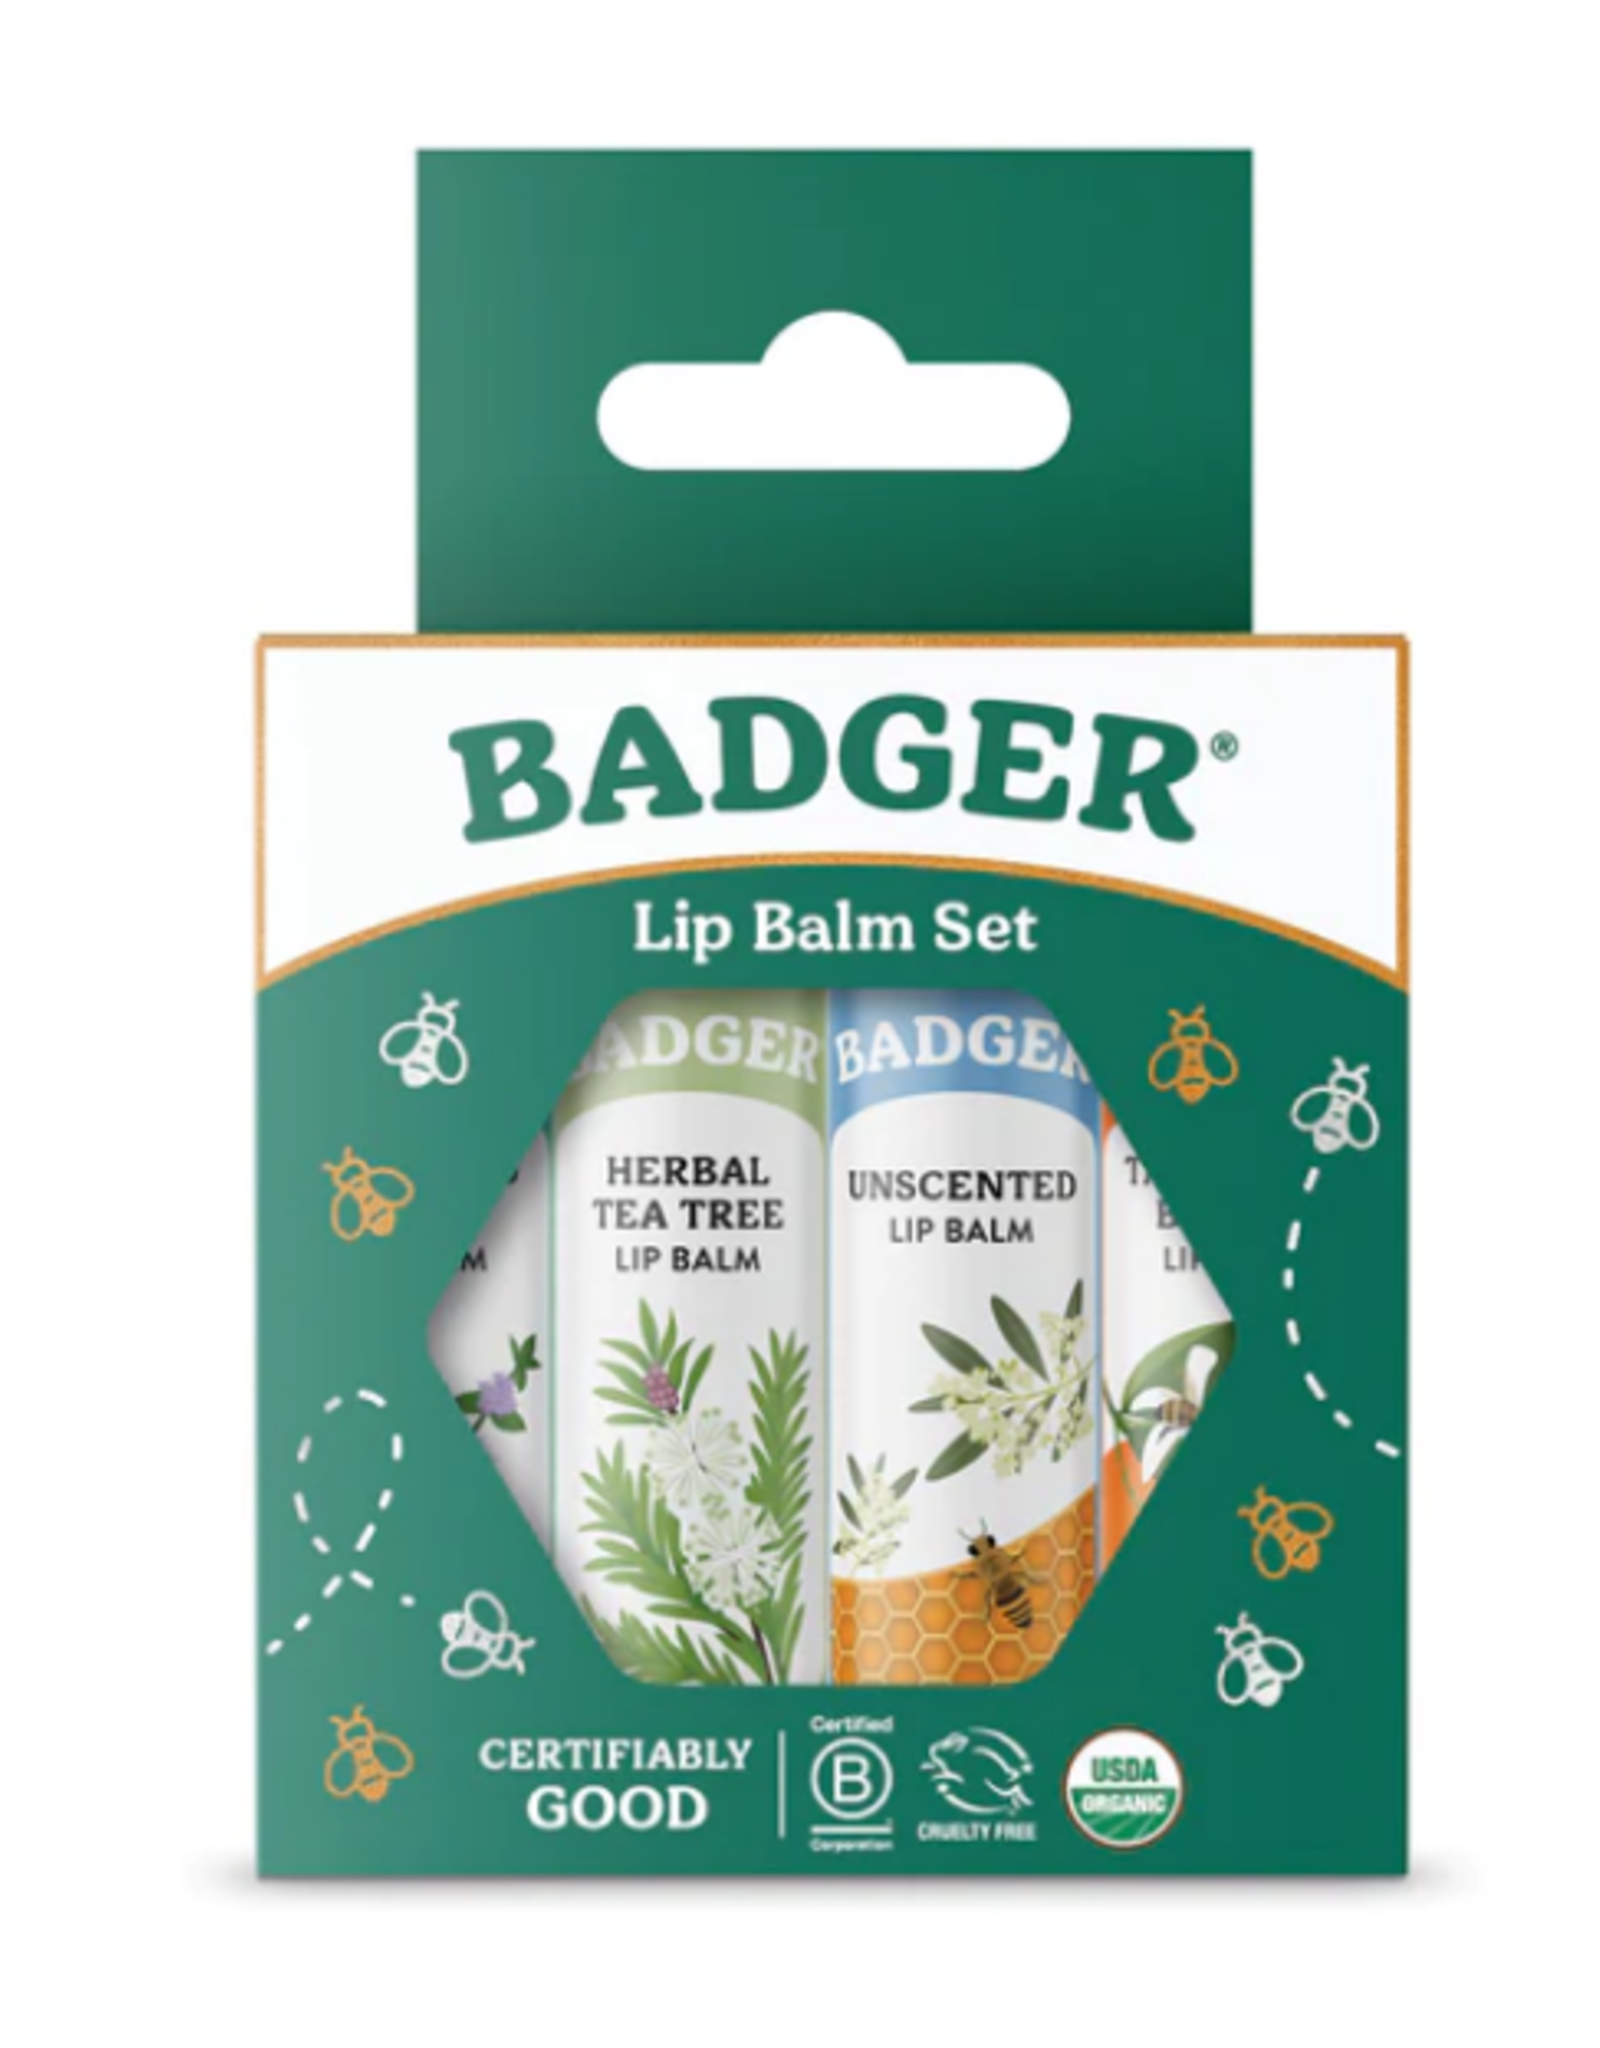 Badger Classic Lip Green 4PK - (Contains 4 .15oz sticks: Unscented, Tangerine Breeze, Highland Mint, and Tea Tree Lemon Balm Sticks)